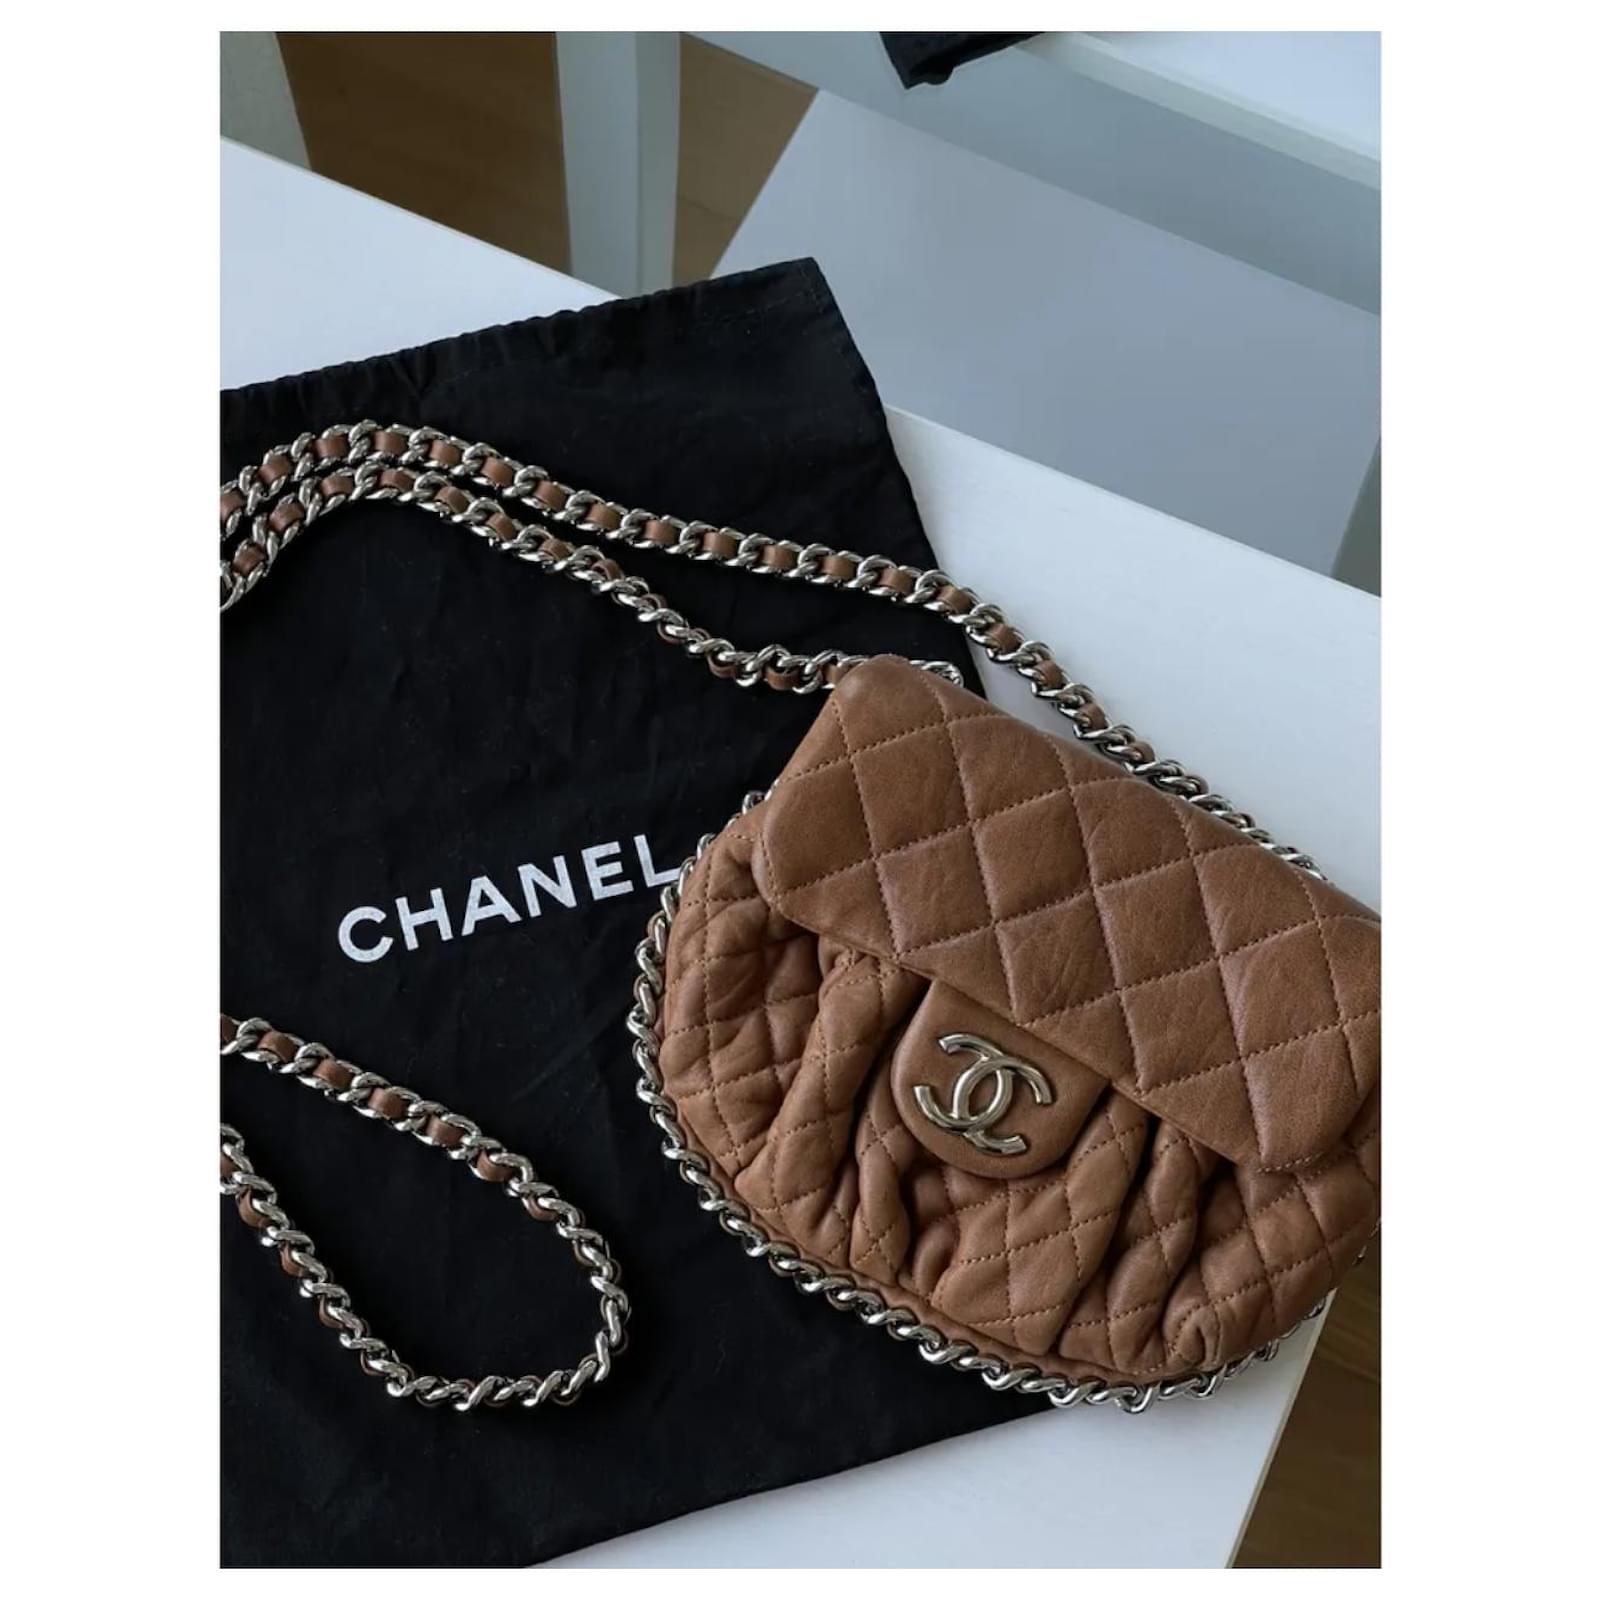 Chanel Chain Around Bag Mini Size In dark beige or camel color